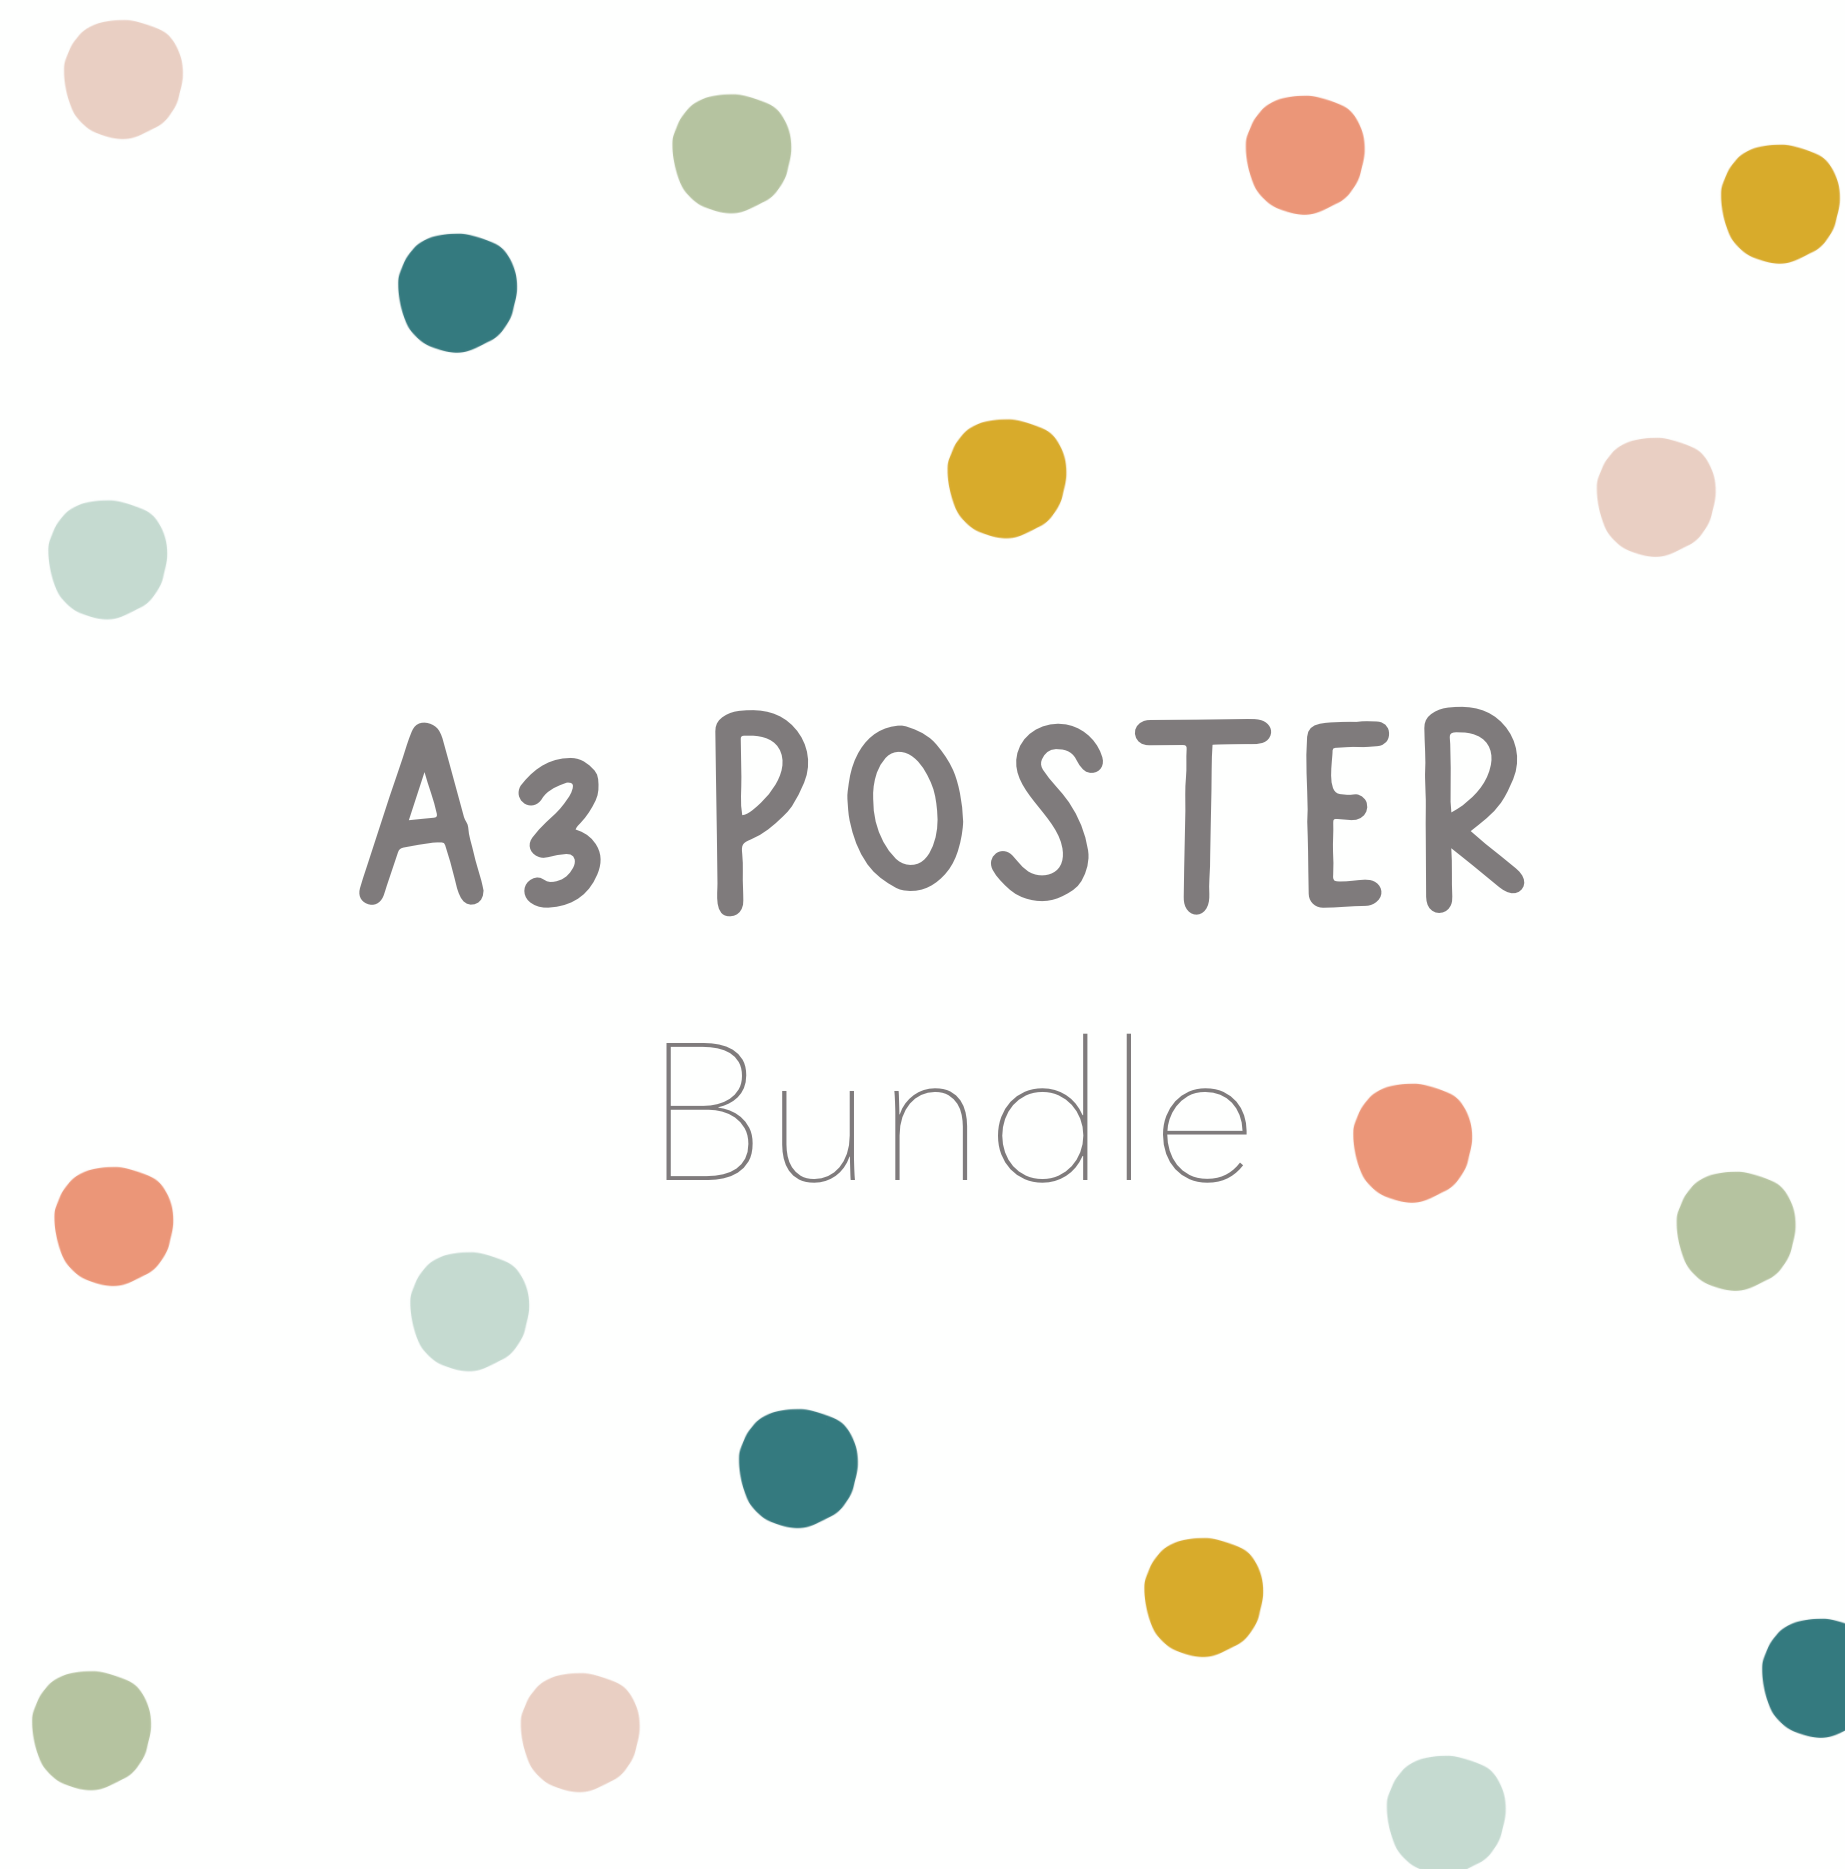 Poster-Bundle - A3